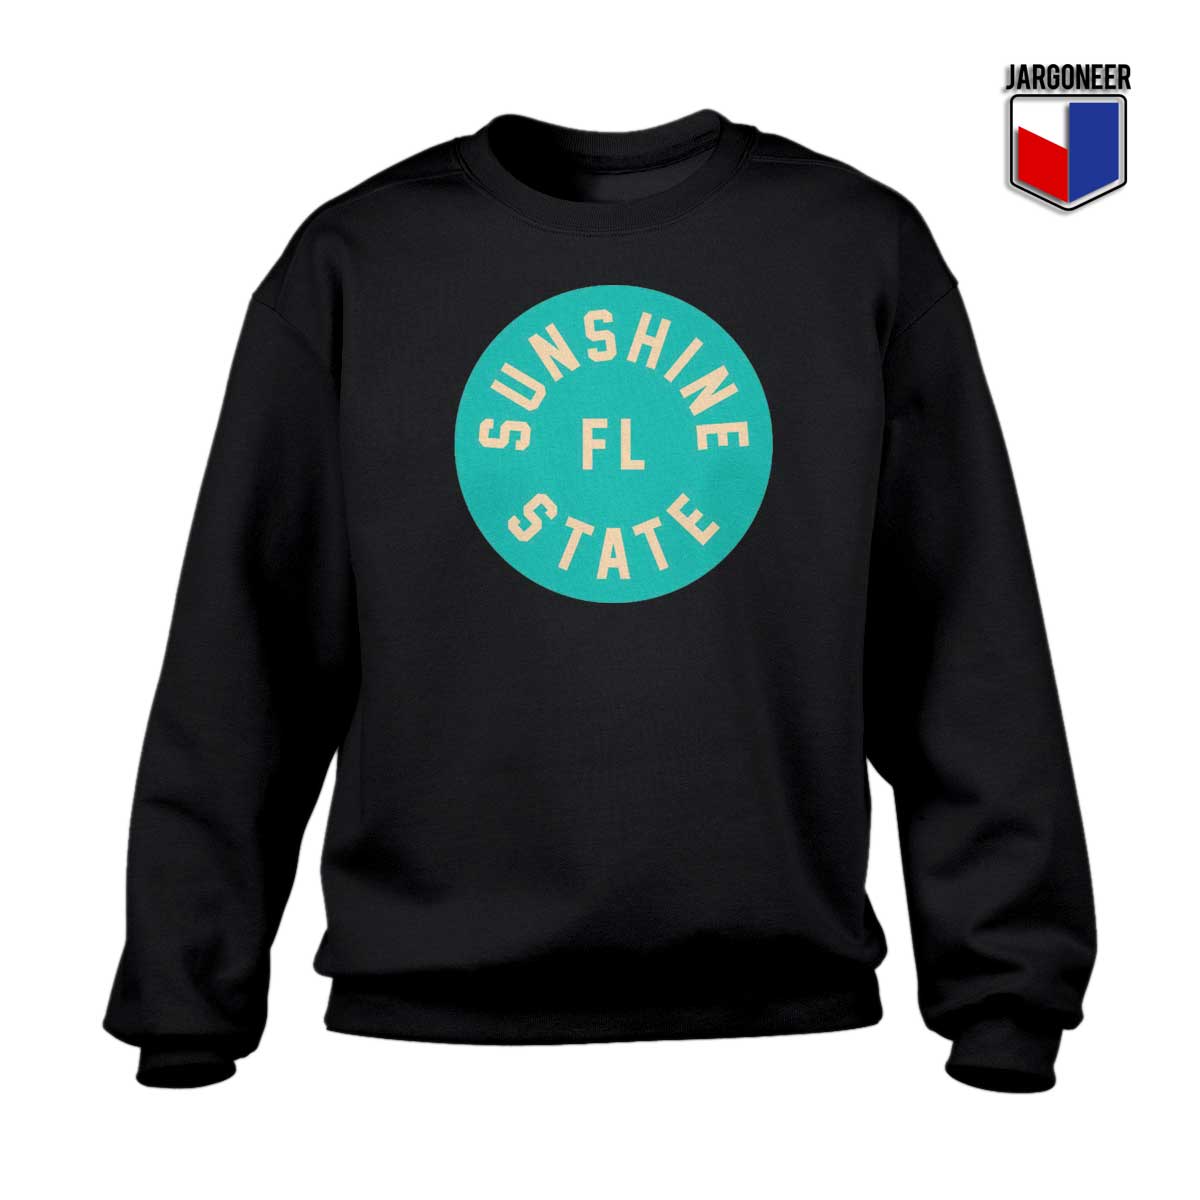 Sunshine State Sweatshirt - Shop Unique Graphic Cool Shirt Designs